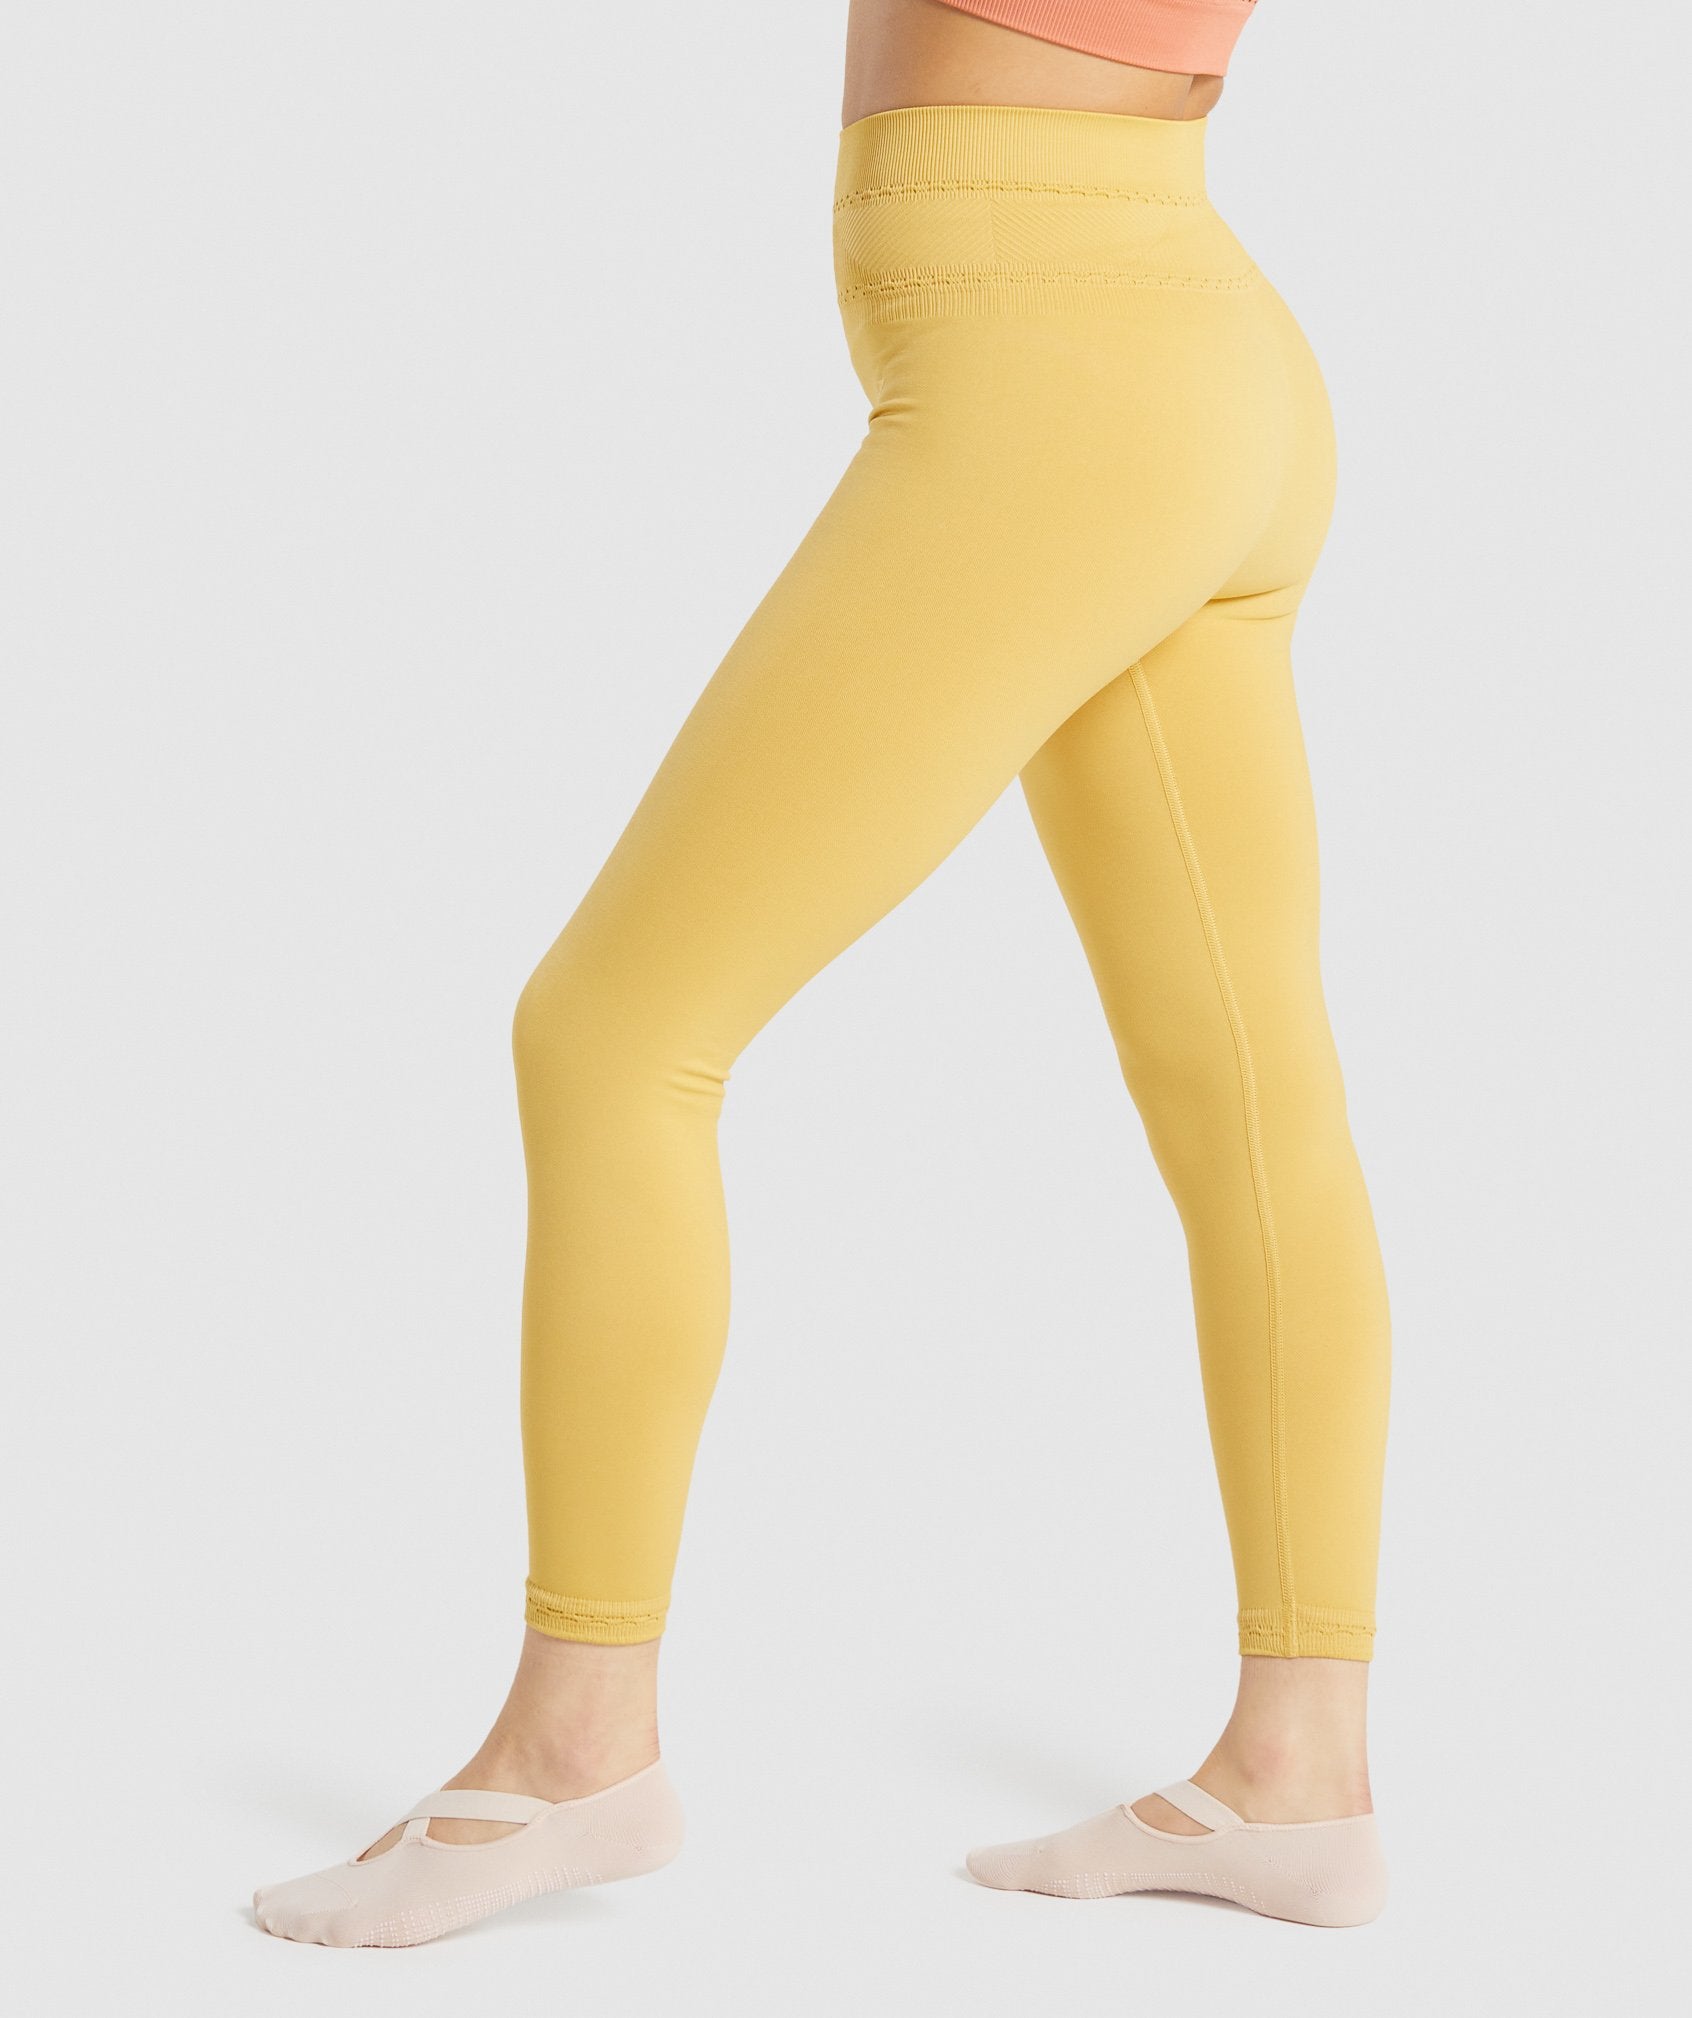 Gymshark Flex High Waisted Seamless Leggings in Yellow Marl Sz